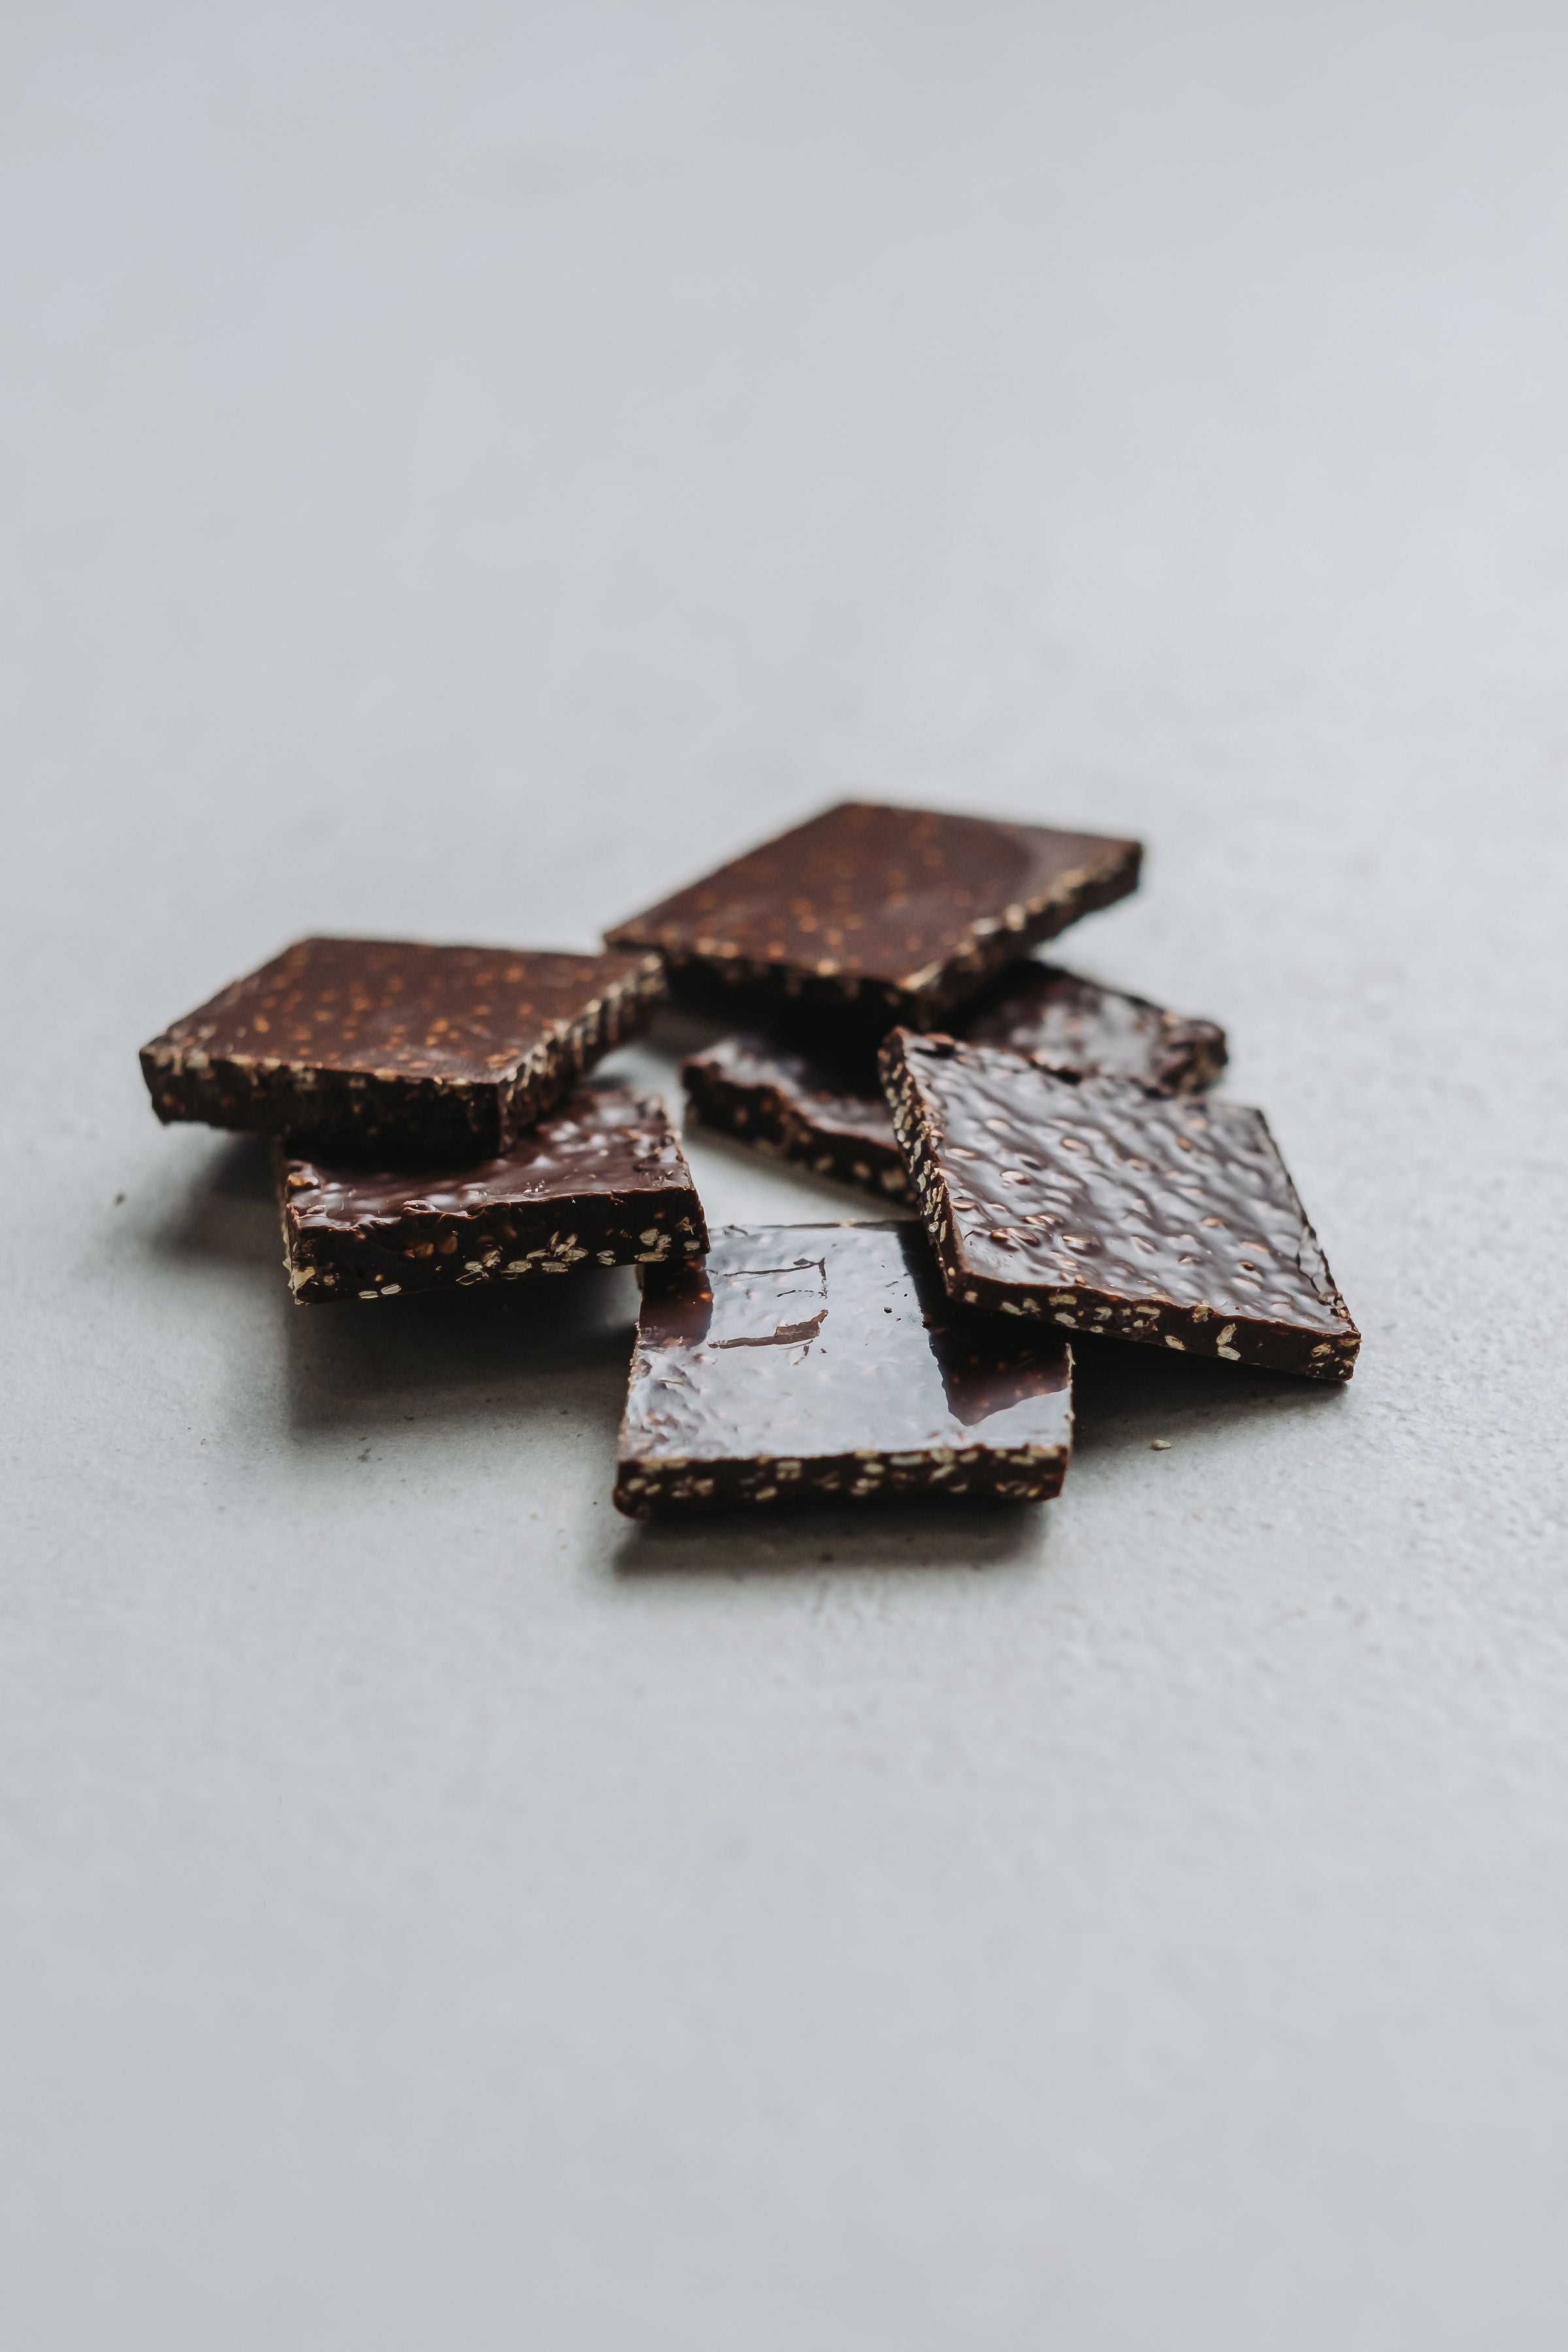 Coffret assortiment chocolat NOIR 350 g (2 étages) – Kapp Chocolatier